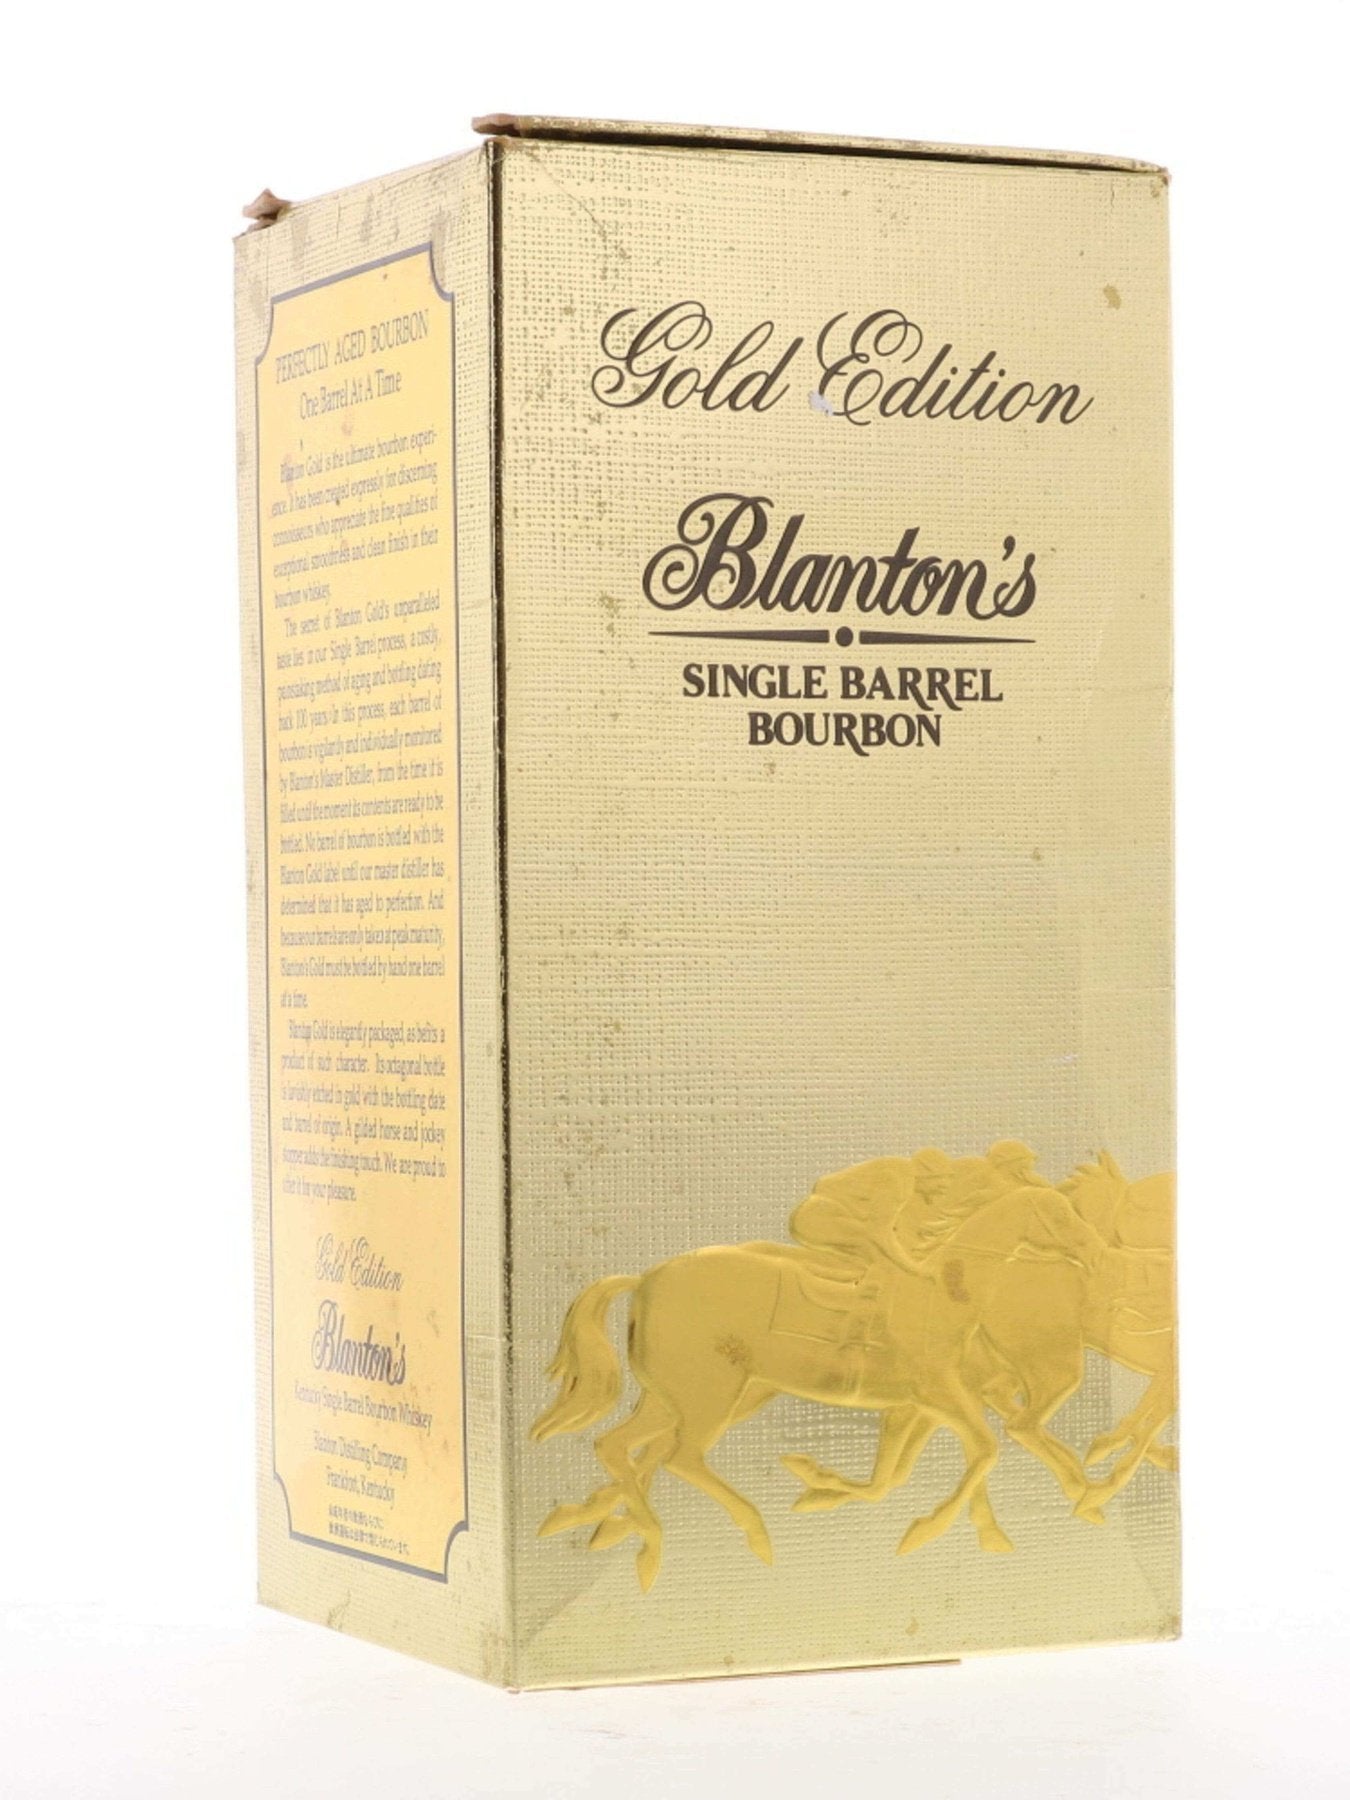 buy-spirits-bourbon-blanton-s-gold-takara-gold-box-single-barrel-bourbon-dumped-1999-online-28745758146728.jpg?v=1619910662